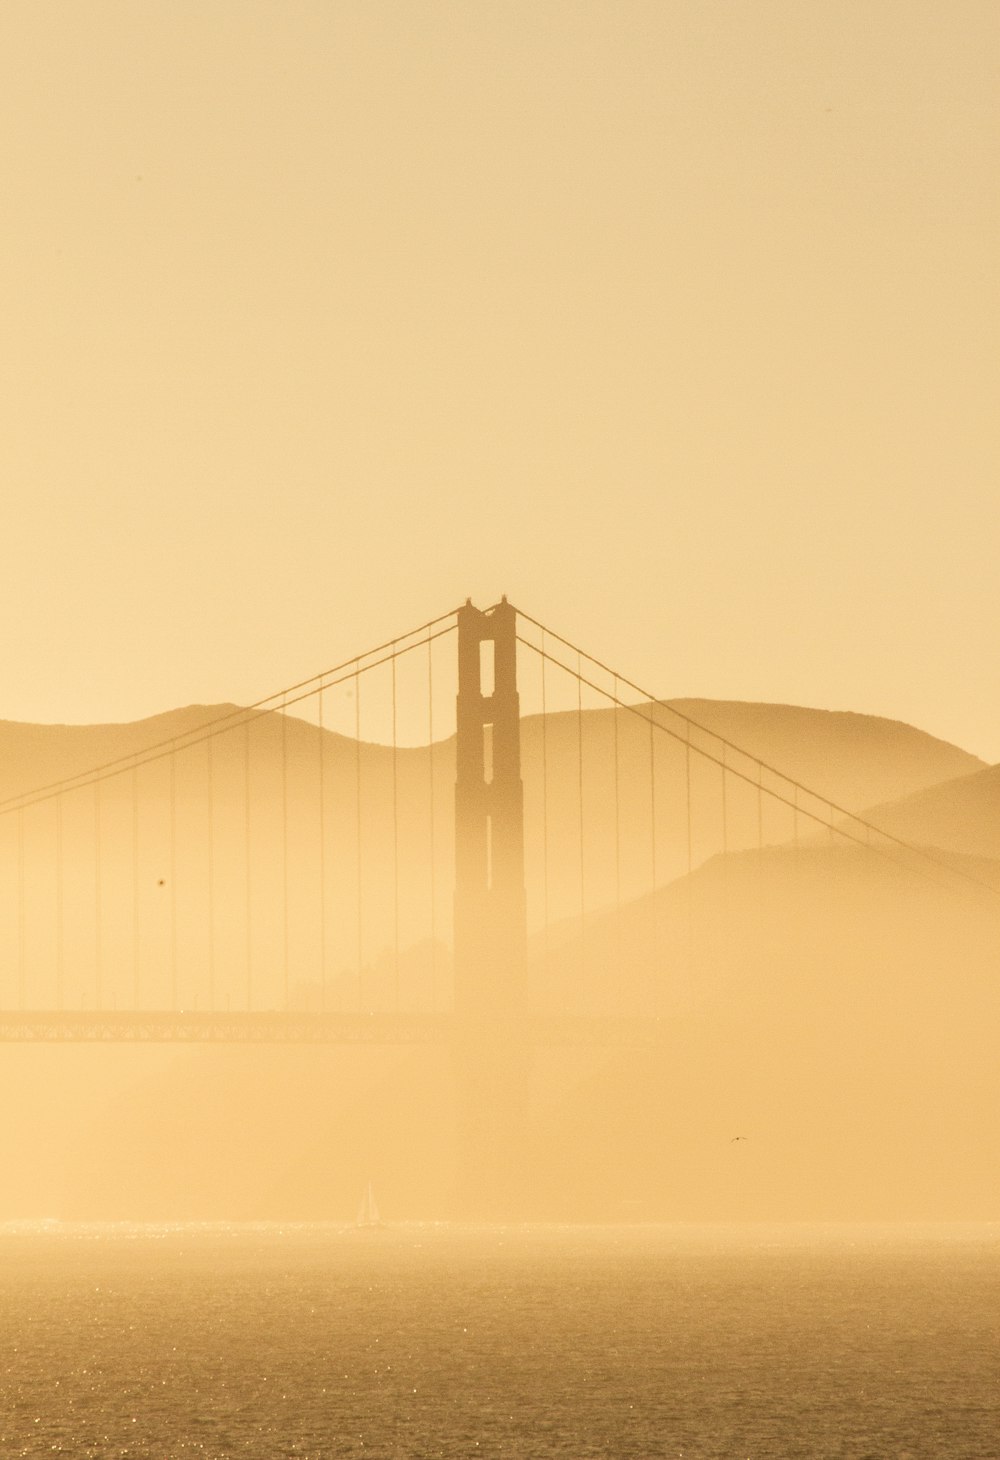 Le Golden Gate Bridge recouvert de brouillard